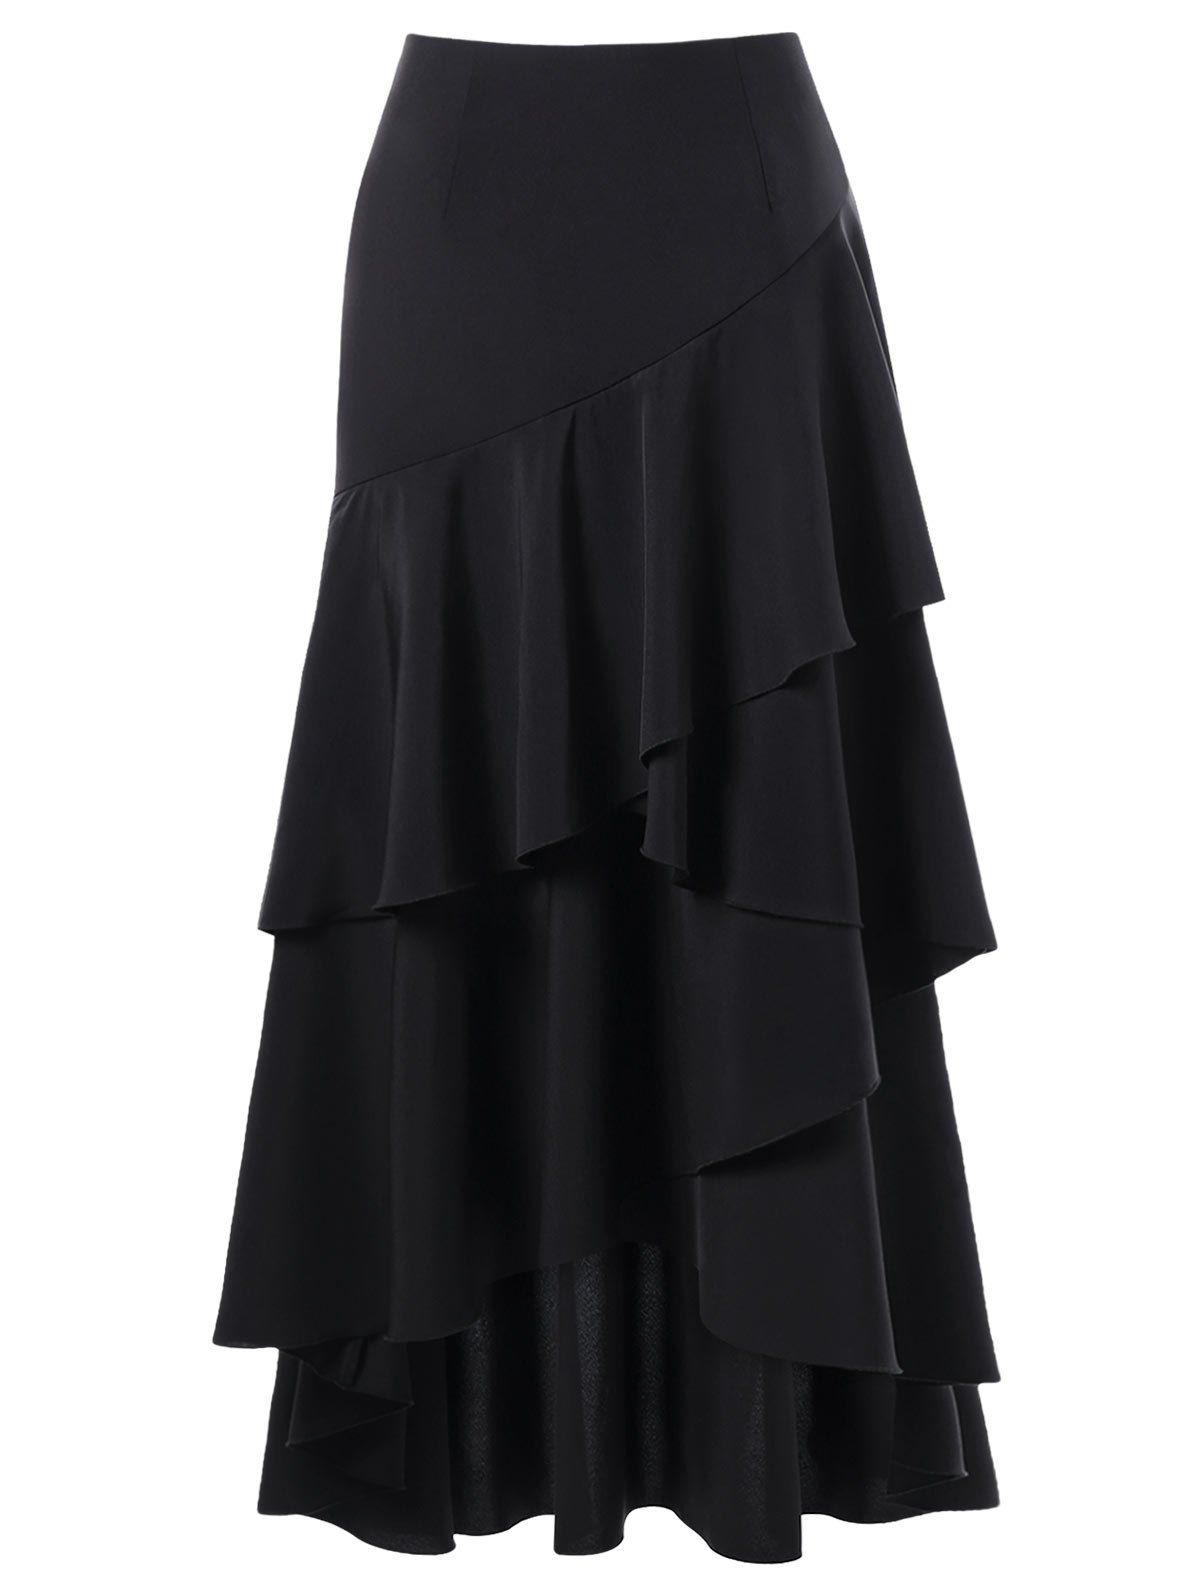 [41% OFF] 2021 Layered Ruffle Skirt In BLACK | DressLily